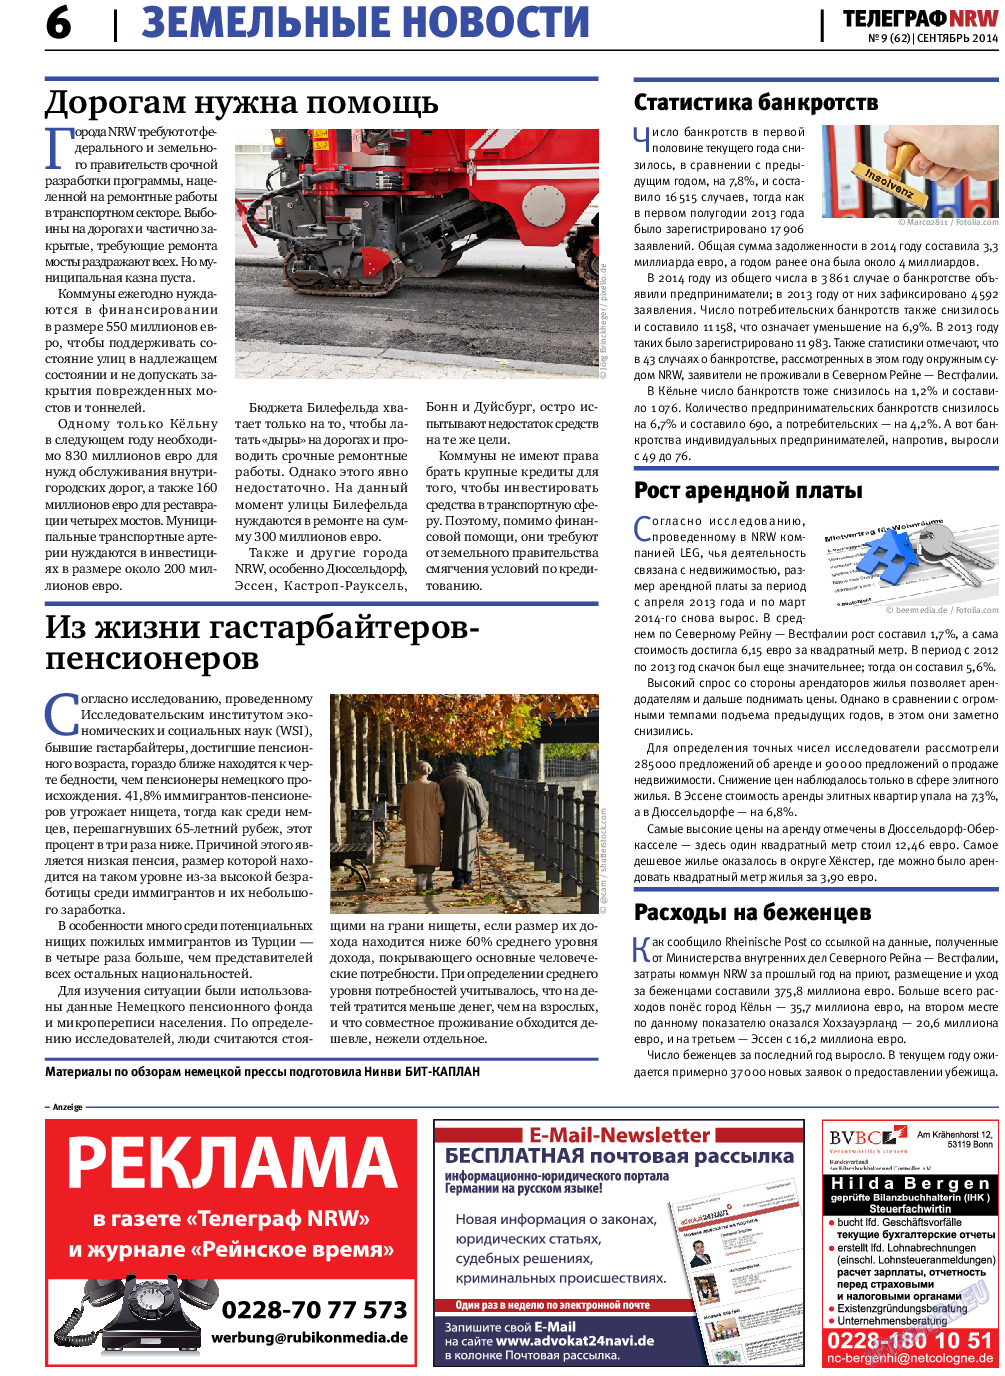 Телеграф NRW, газета. 2014 №9 стр.6